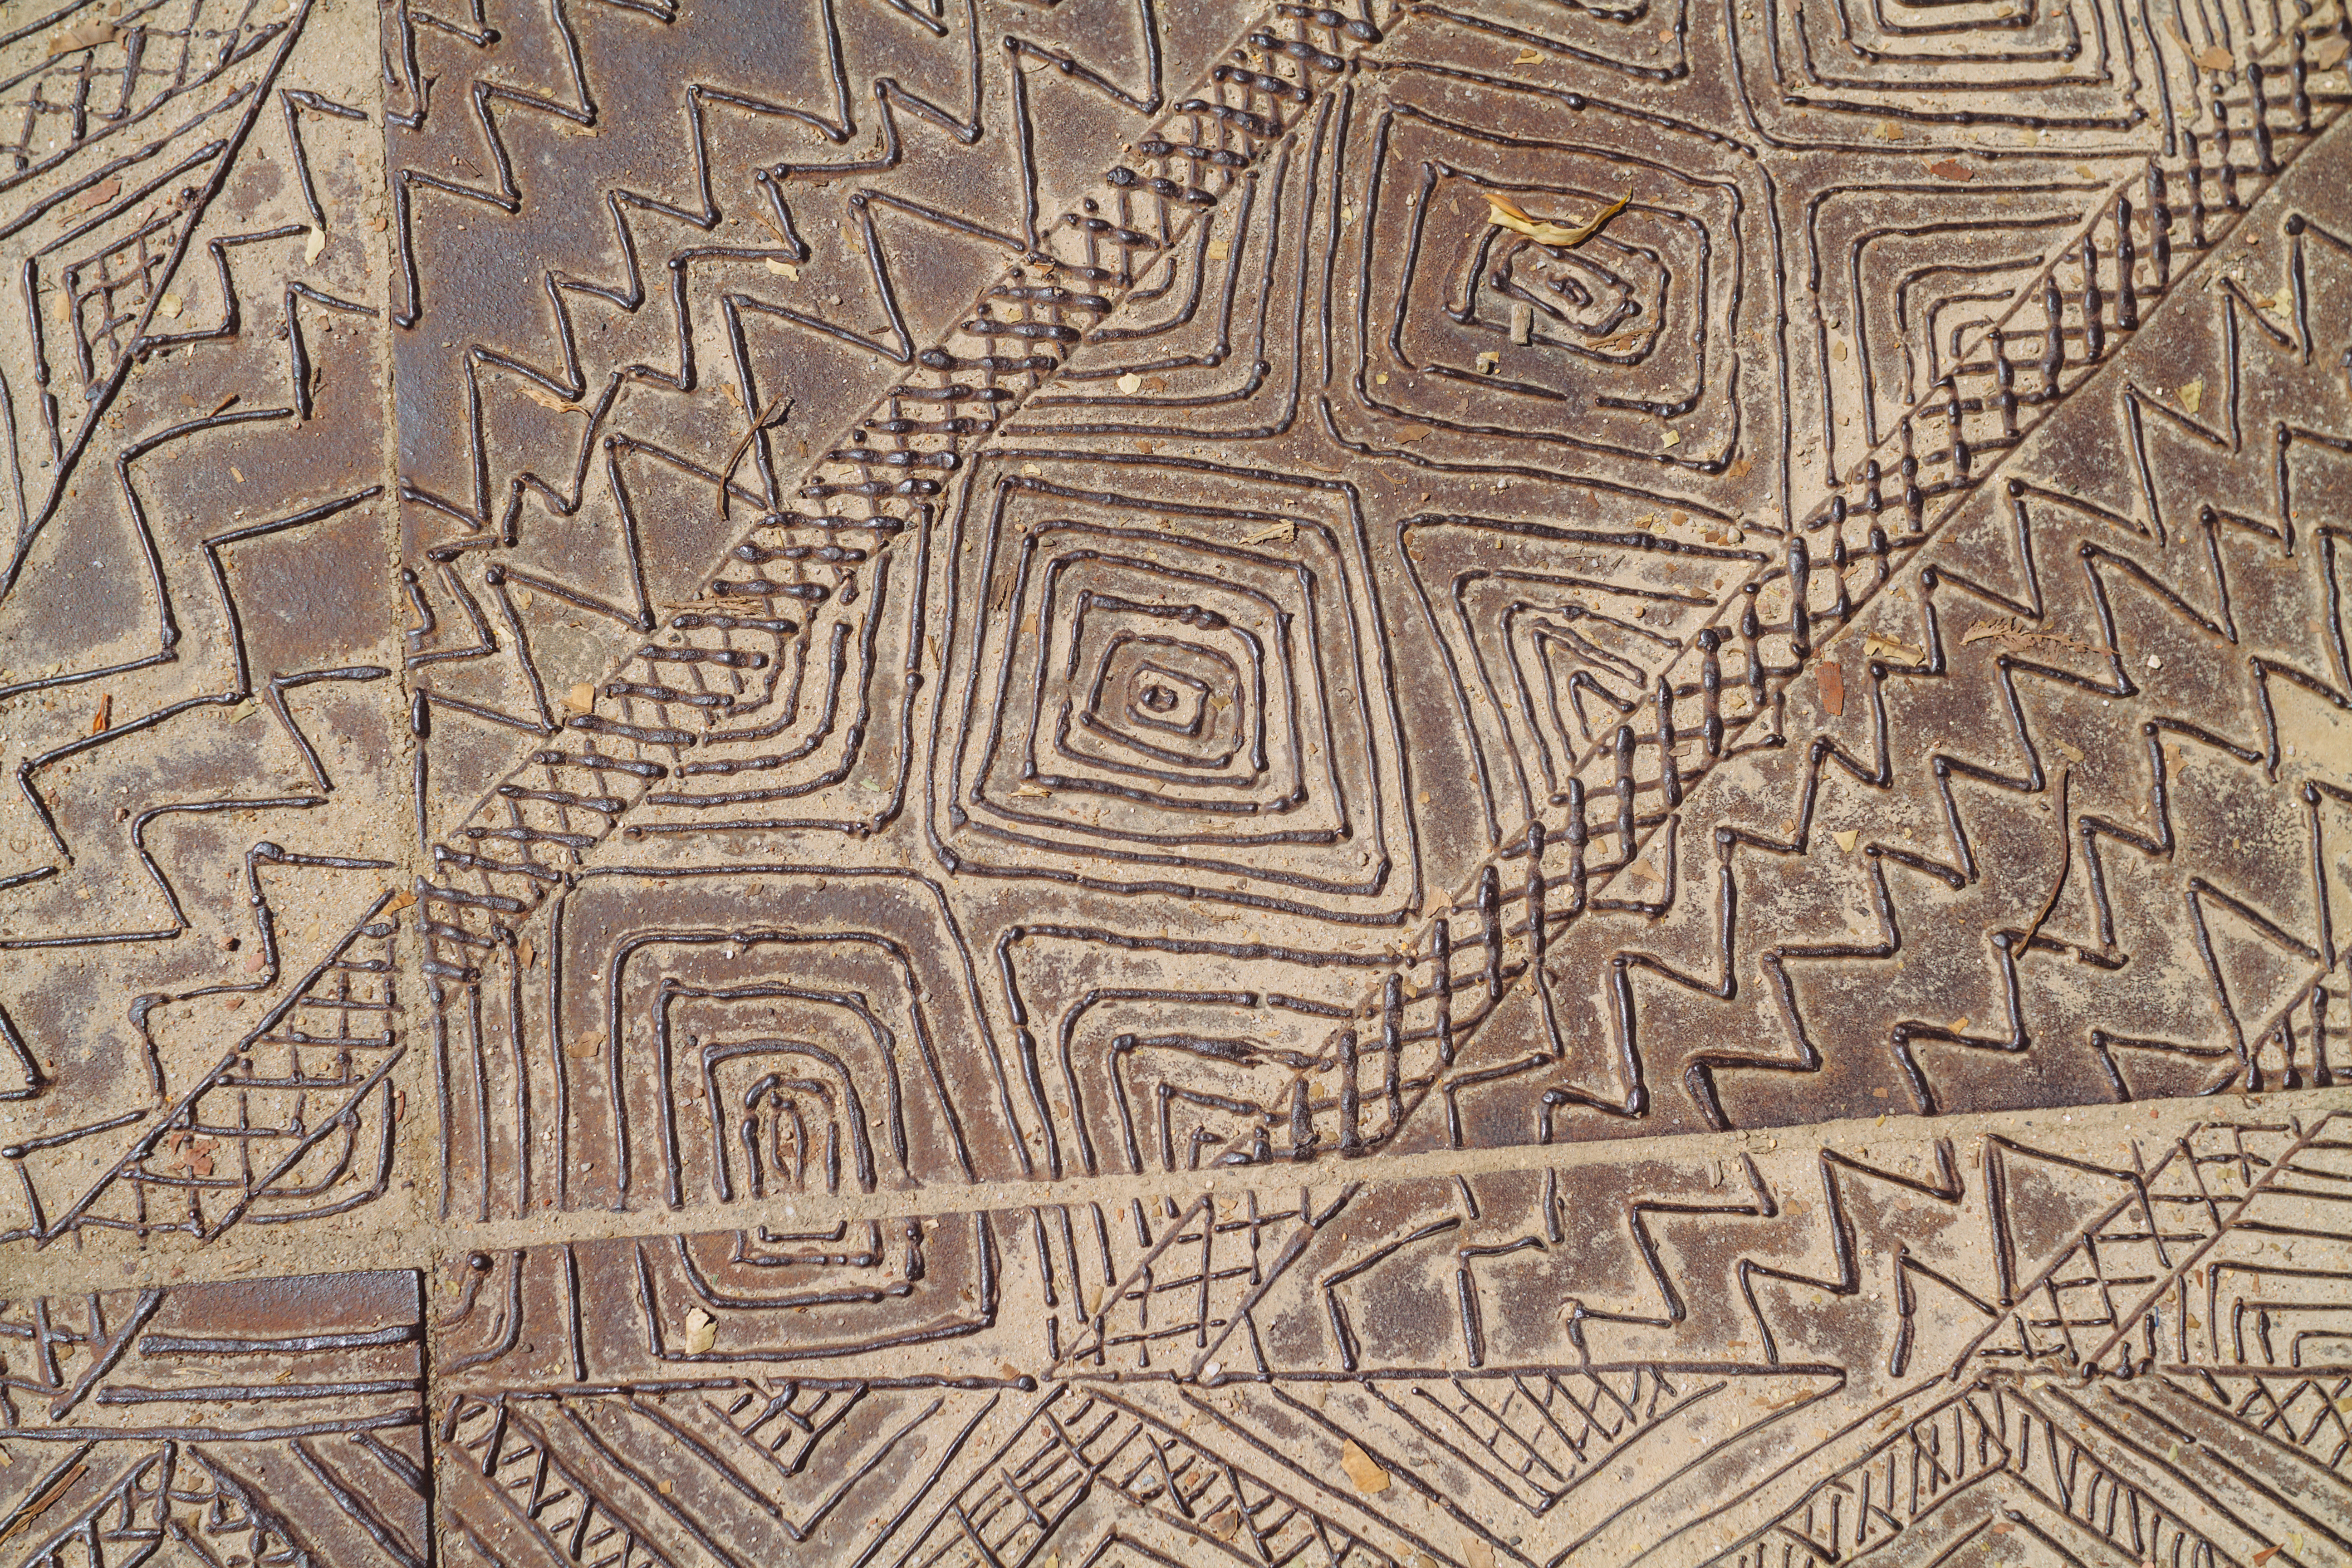 Close up detail of Aboriginal sculpture at Birrarung Marr